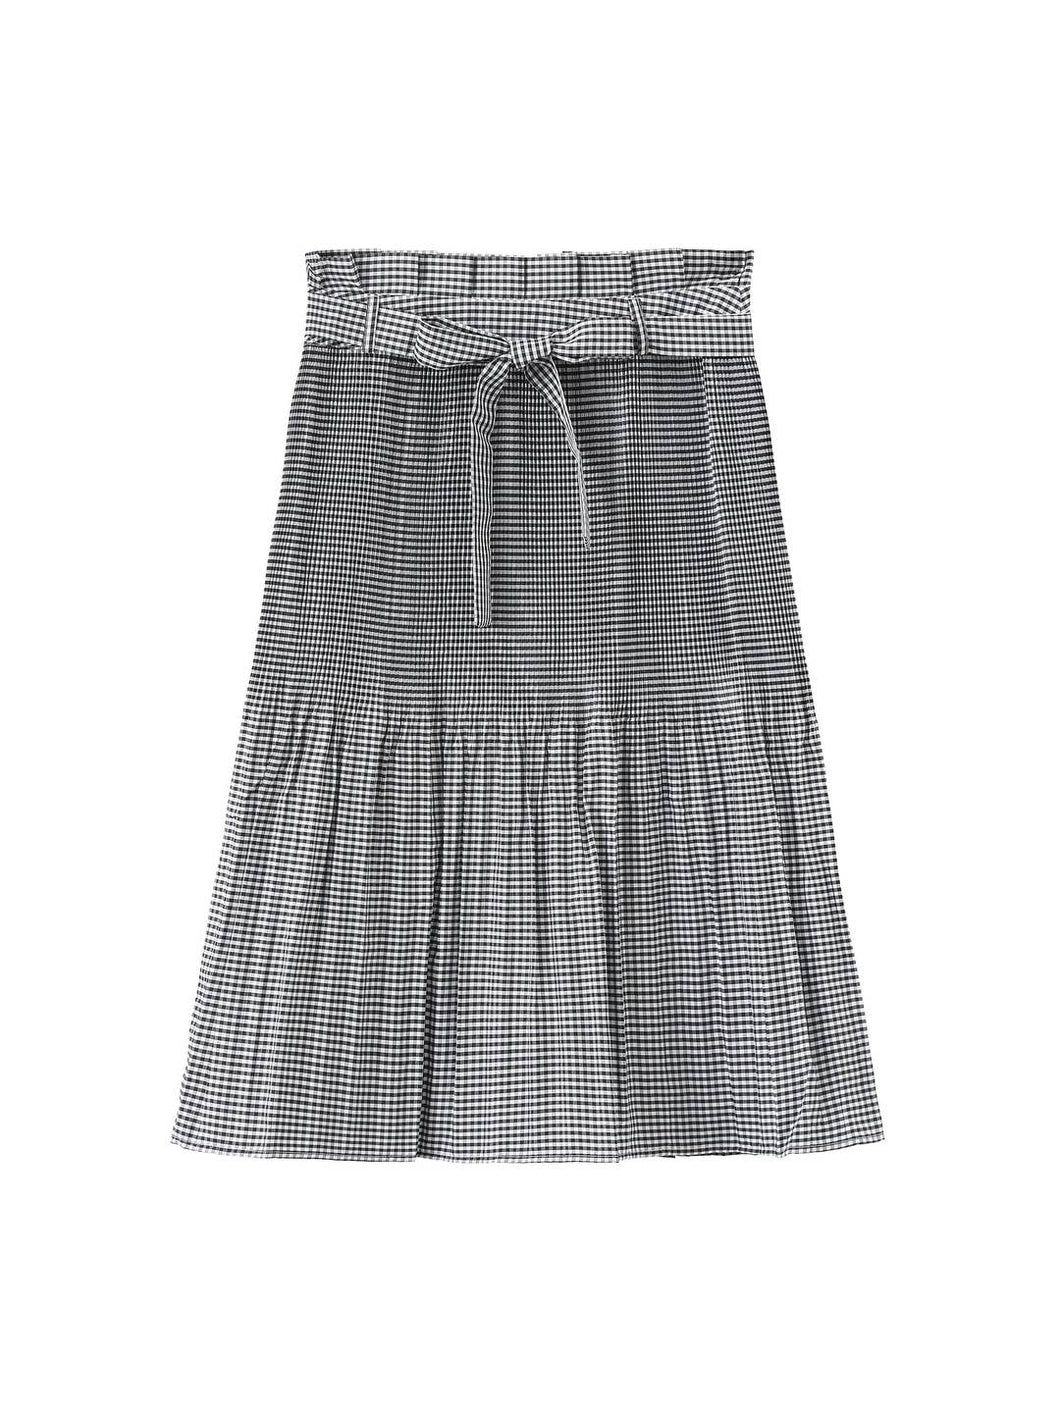 Cubic Plaid Skirt (SZ XS-M)